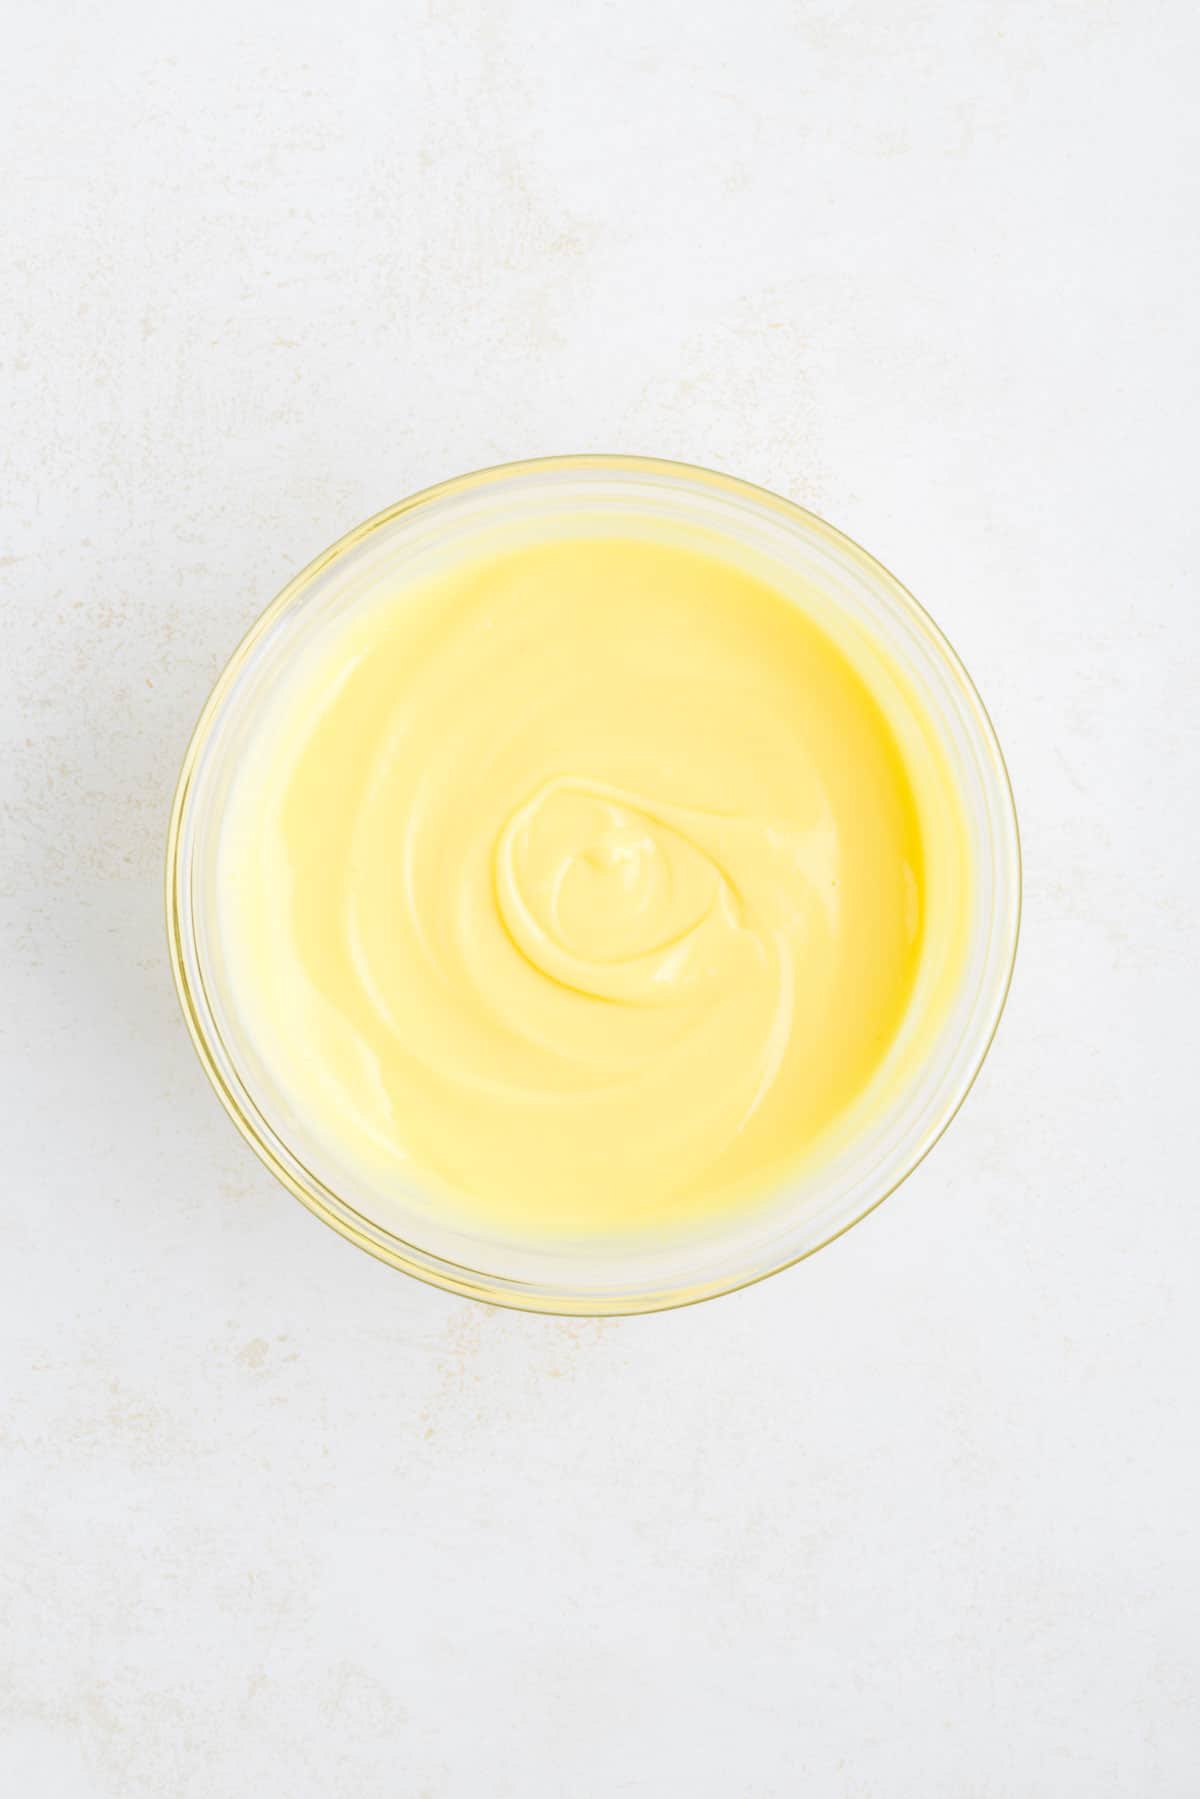 lemon pudding in a bowl